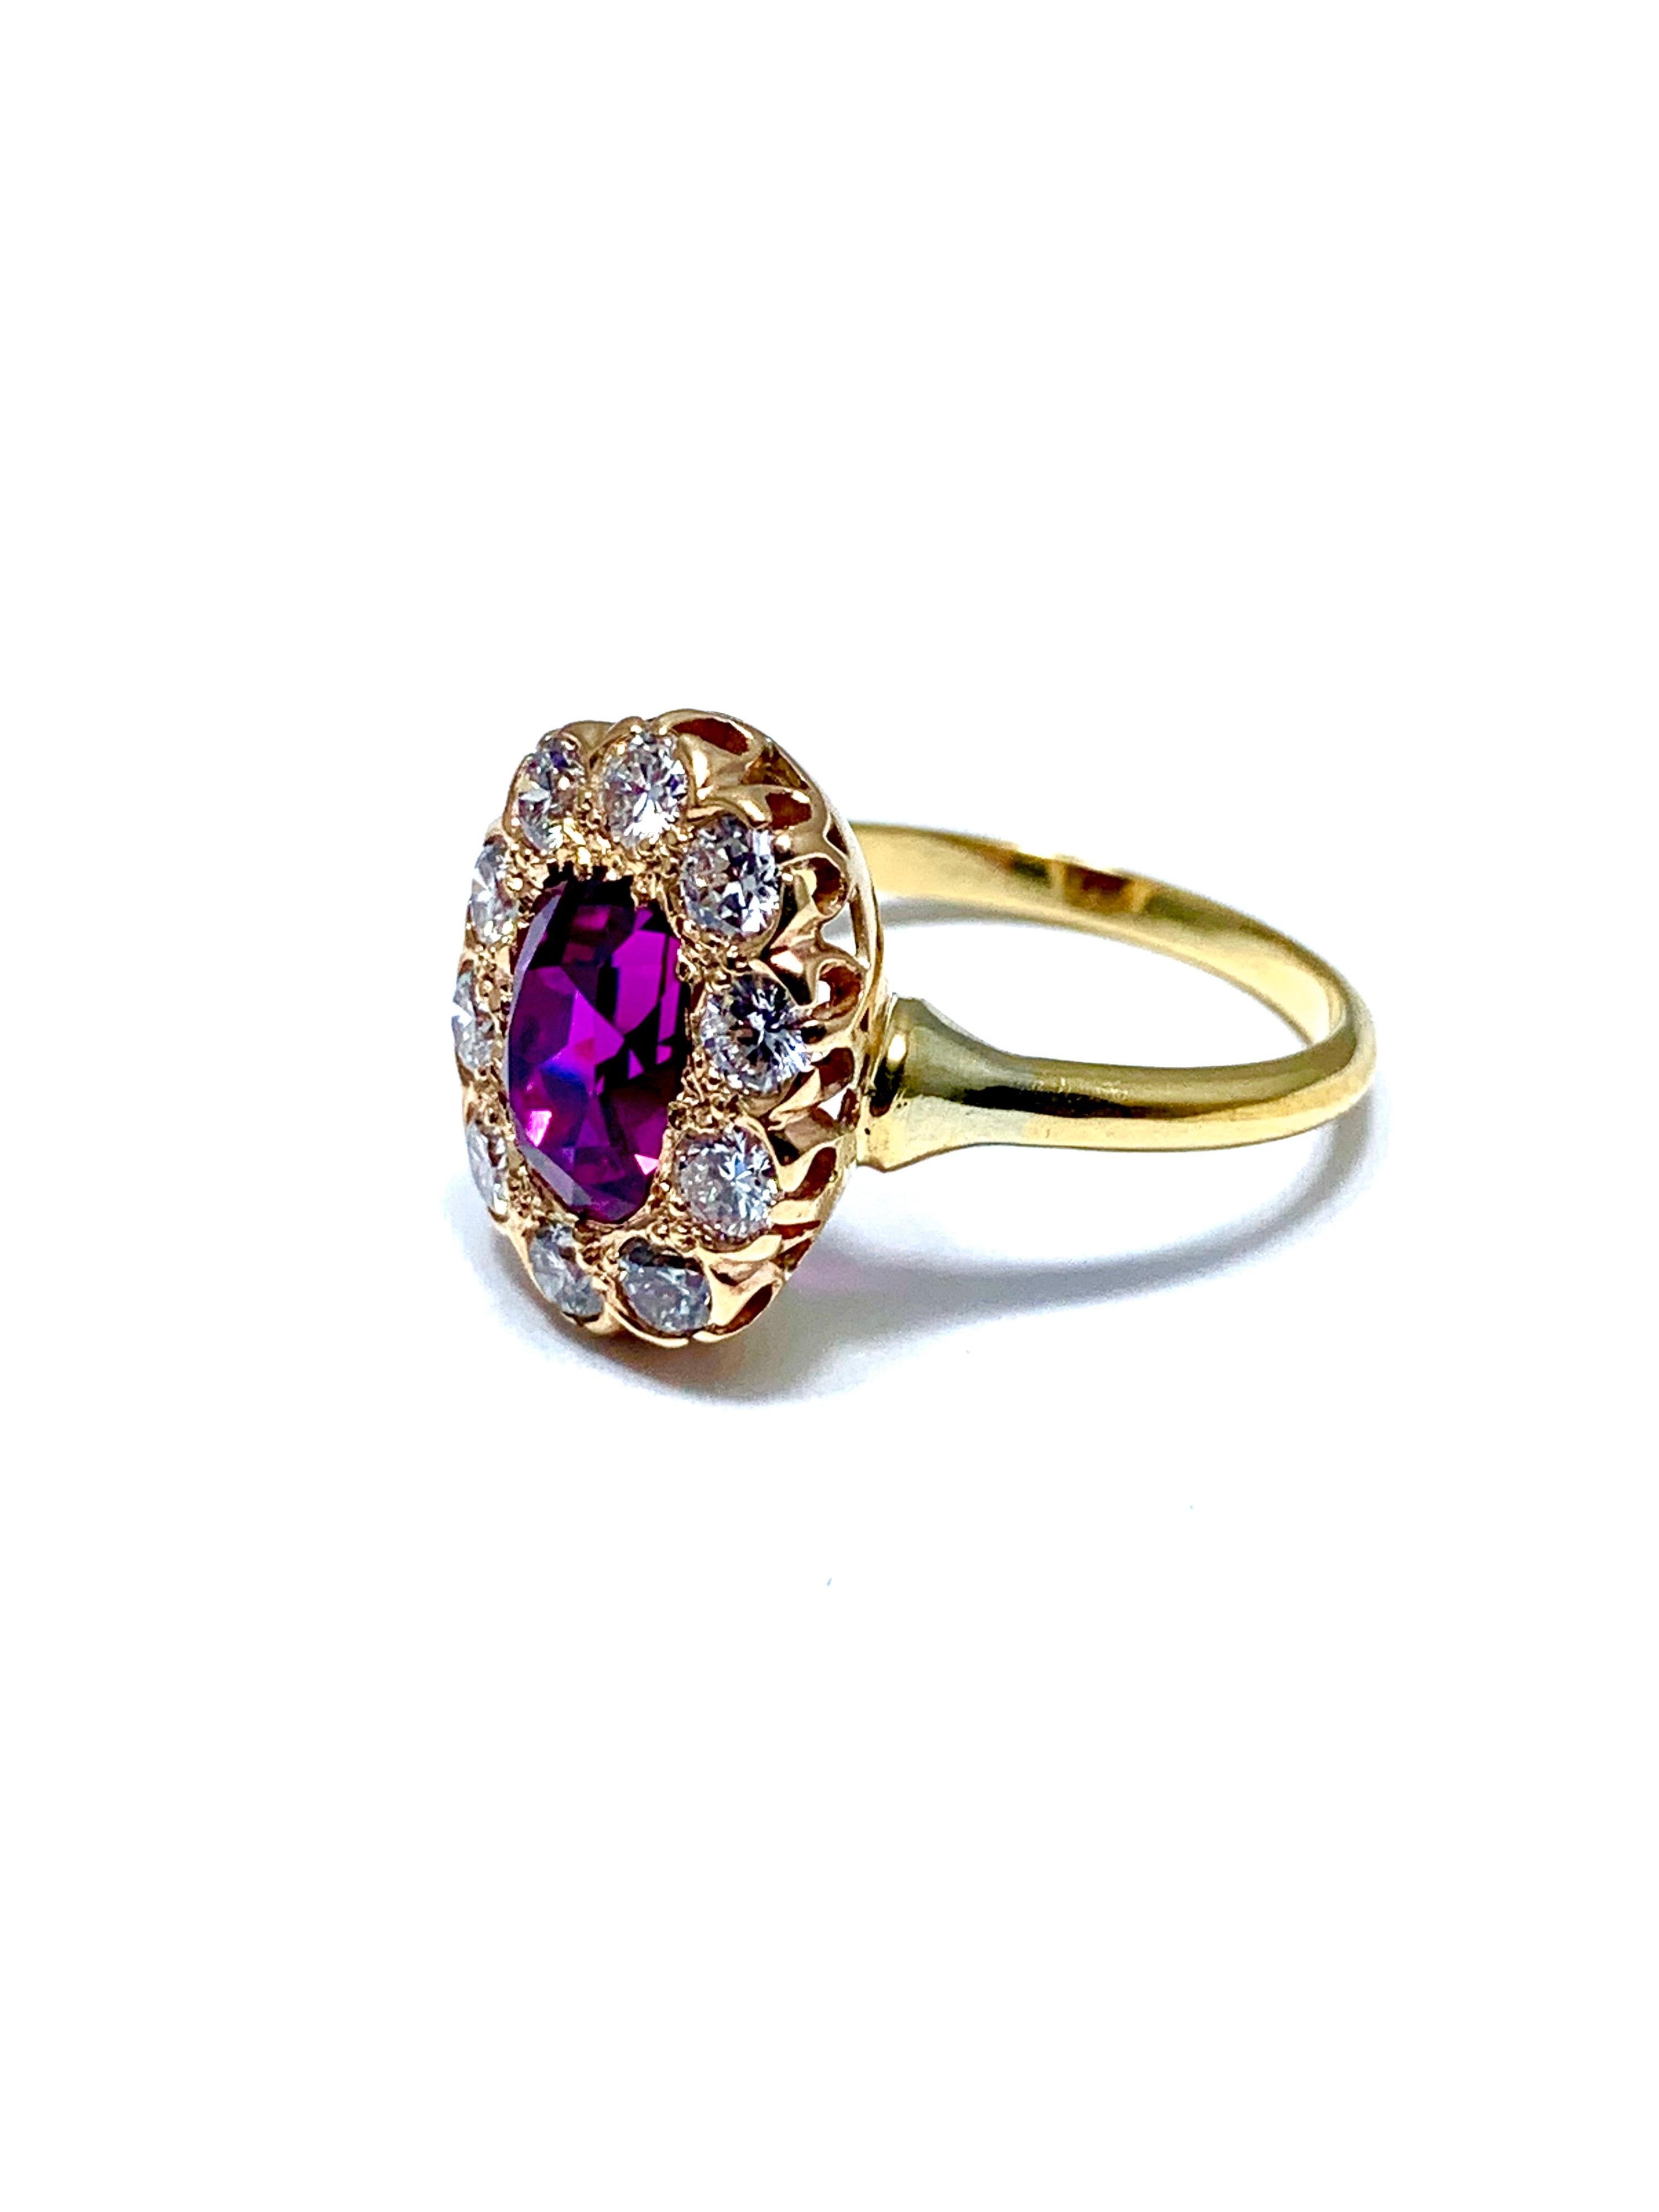 Cushion Cut 3.21 Carat Purplish Pink Sapphire and Round Brilliant Diamond Yellow Gold Ring For Sale